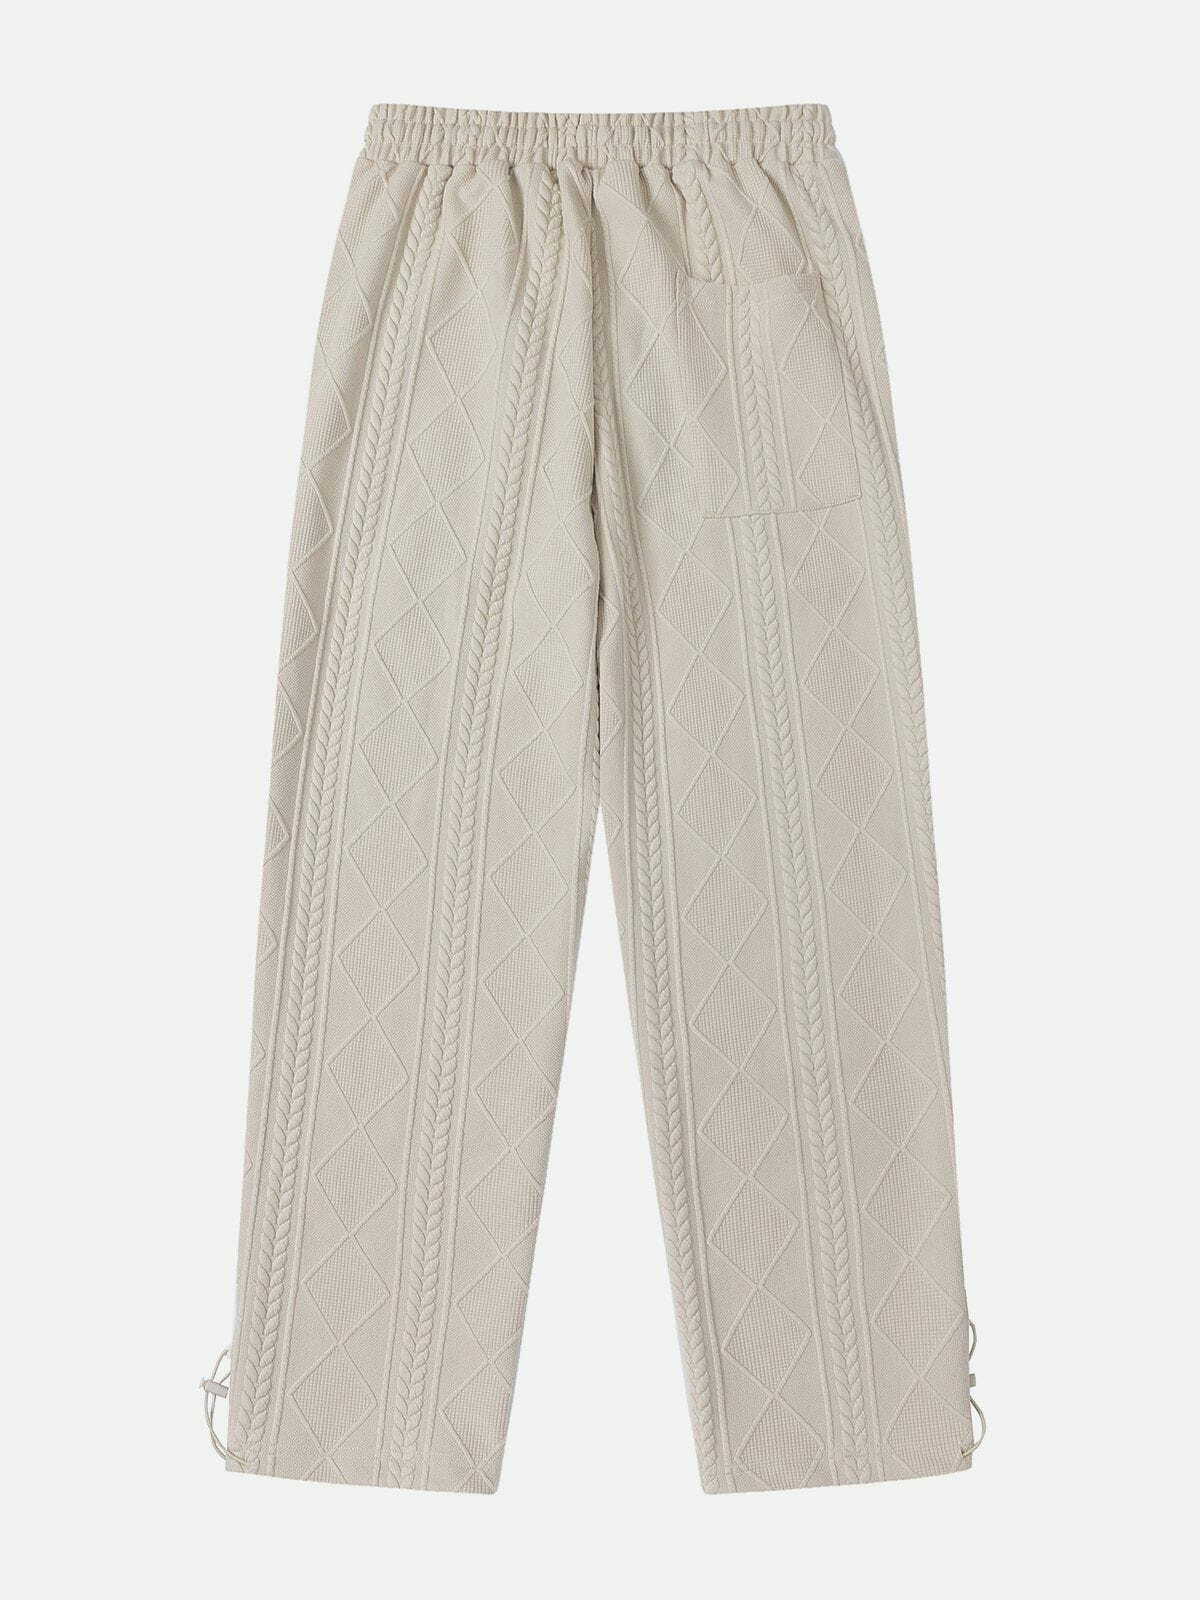 minimalist drawstring pants sleek & versatile streetwear 3803